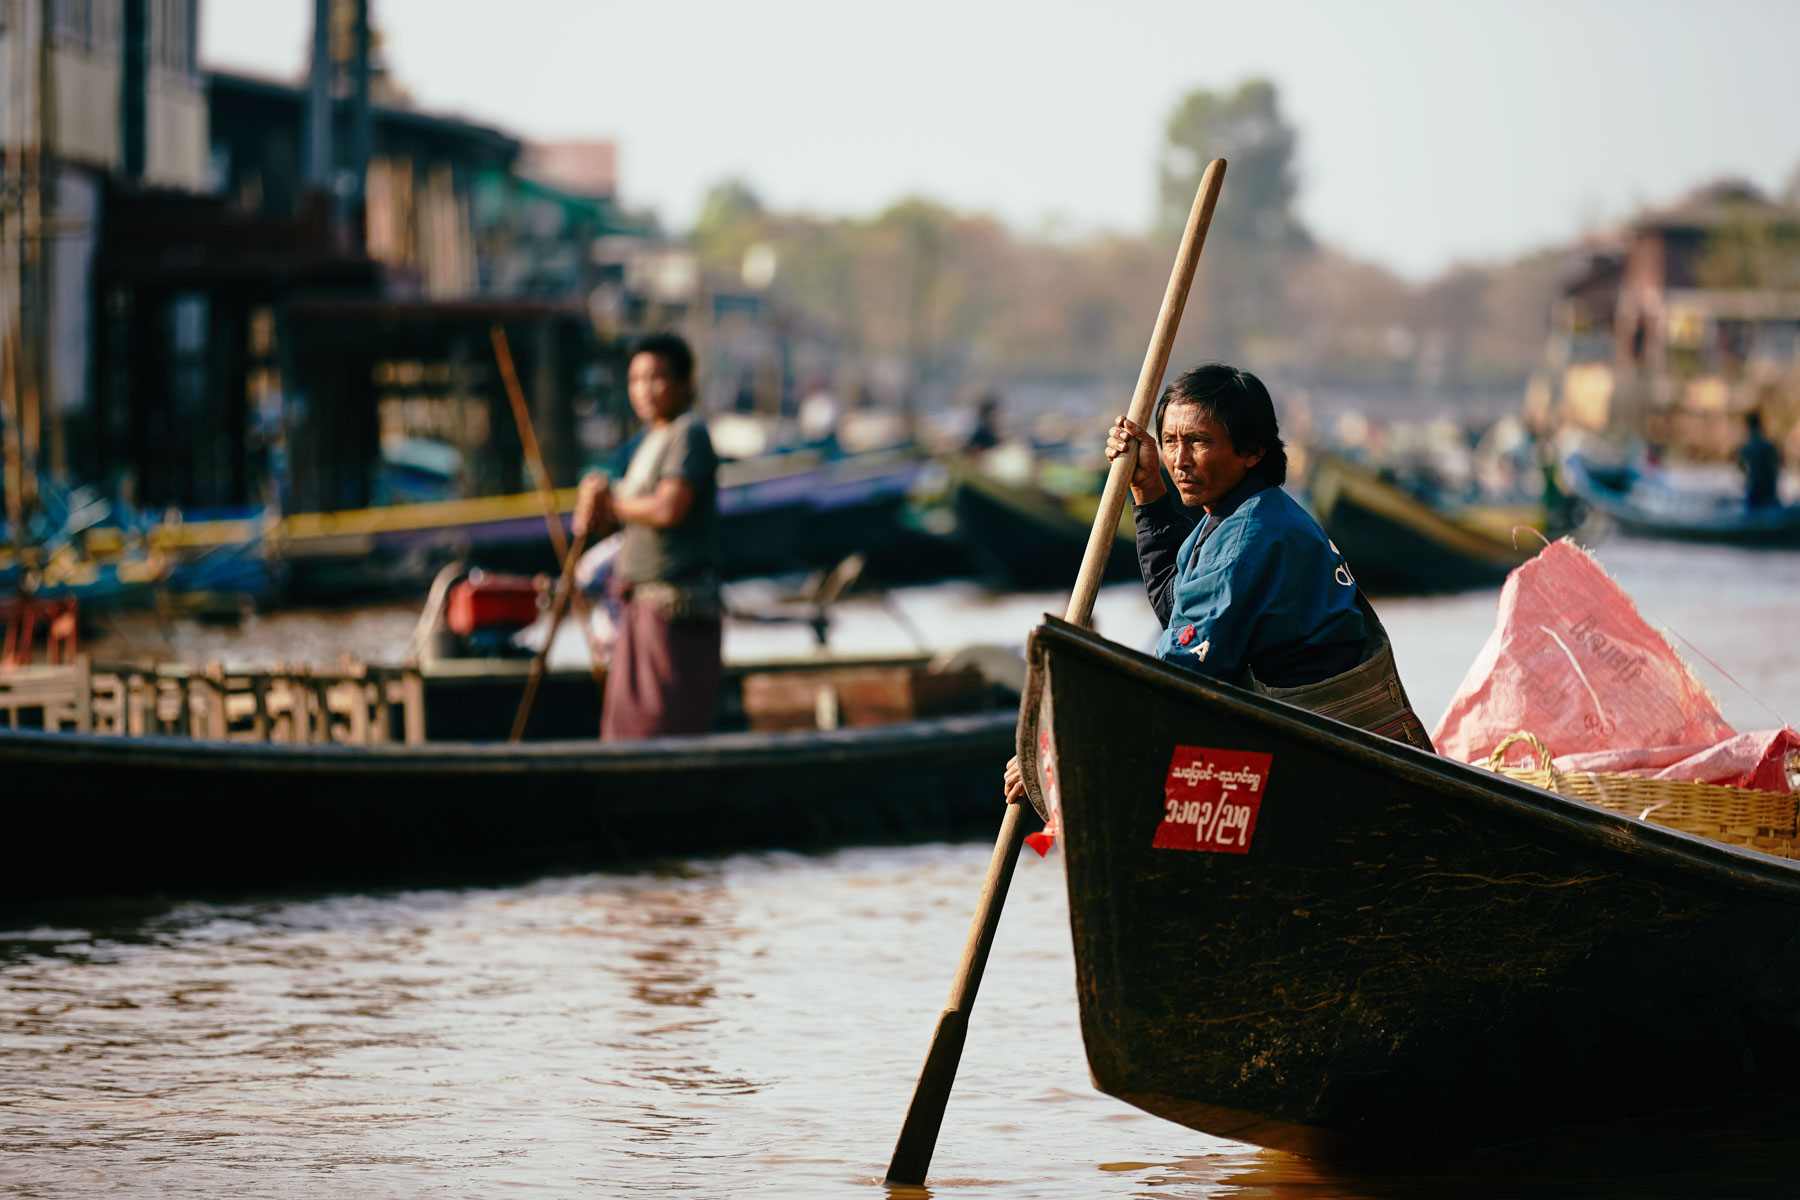 Bootsfahrer im Nebenkanal des Inle Sees/ Shan/ Myanmar, 2015